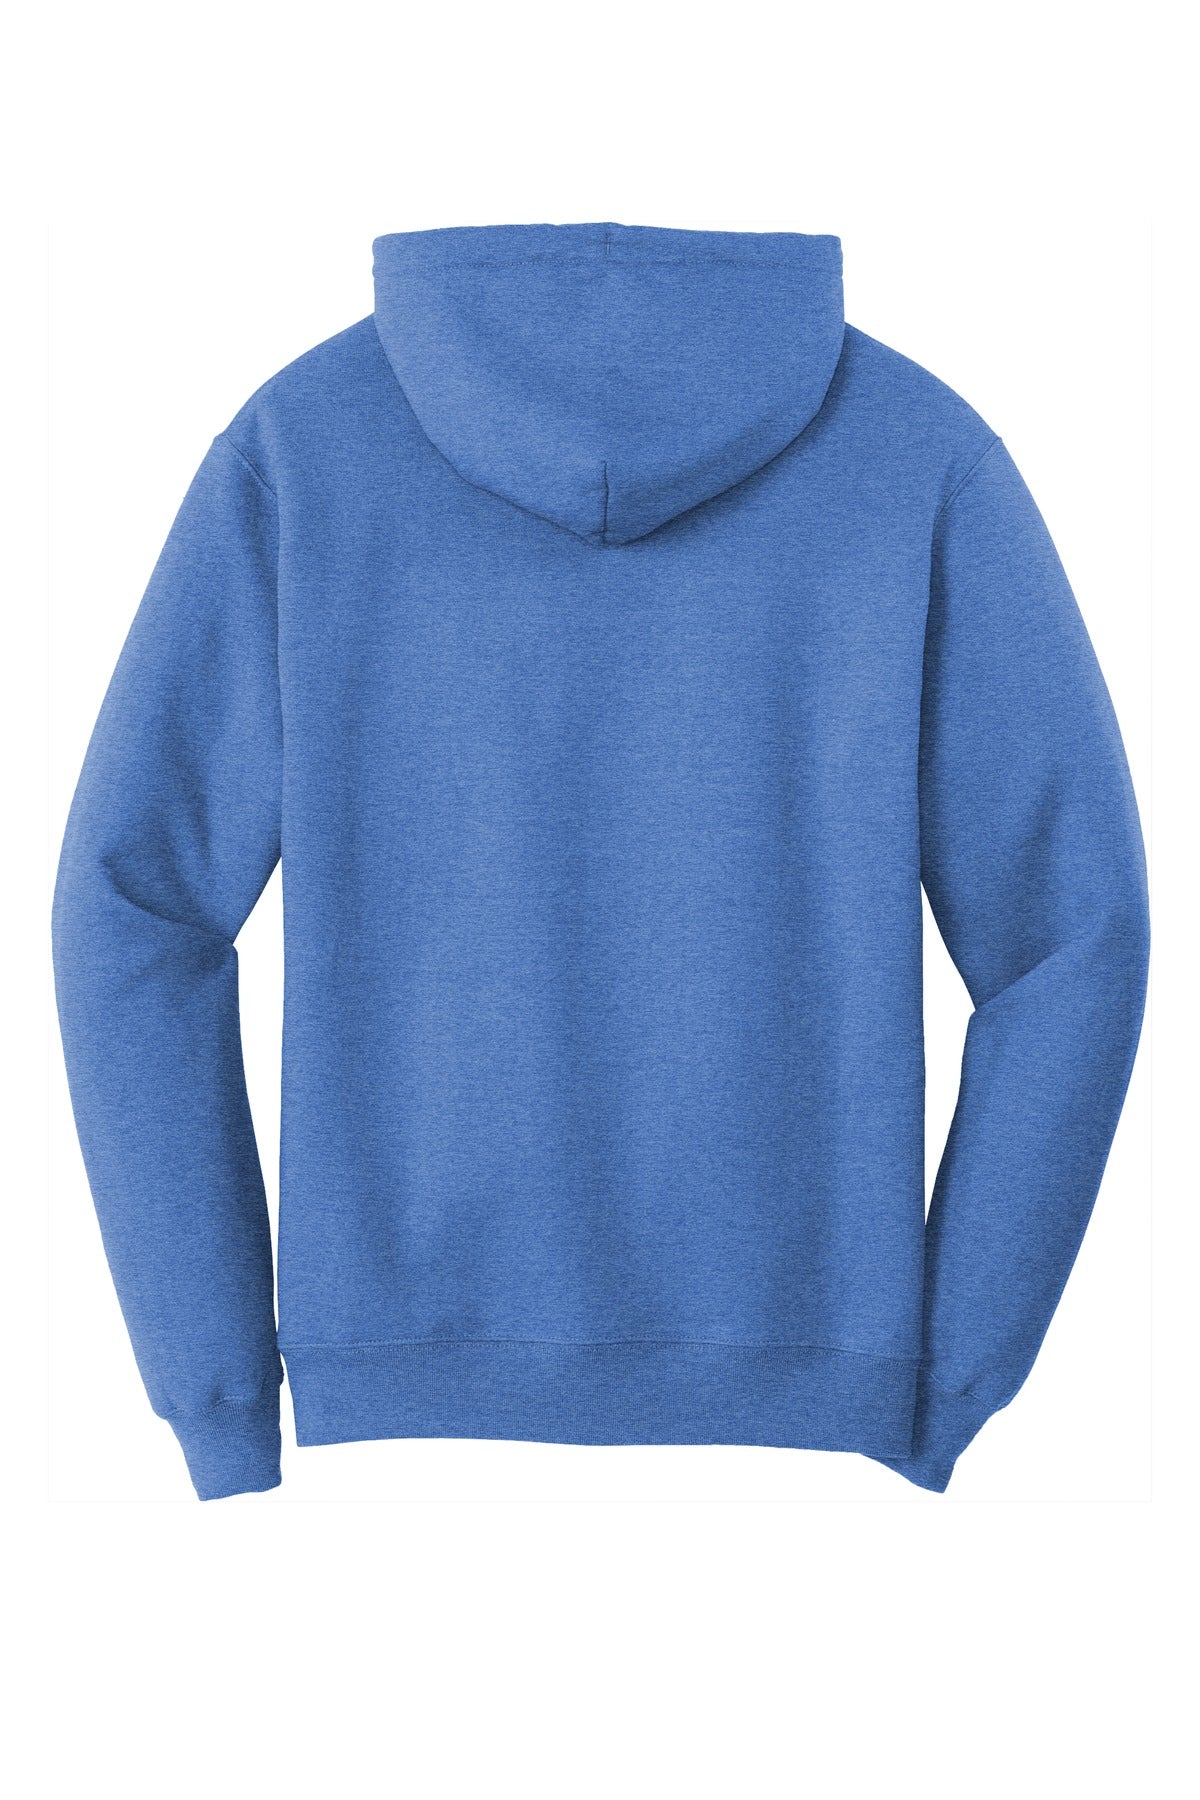 Port & Company - Core Fleece Pullover Hooded Sweatshirt. PC78H - Heather Royal